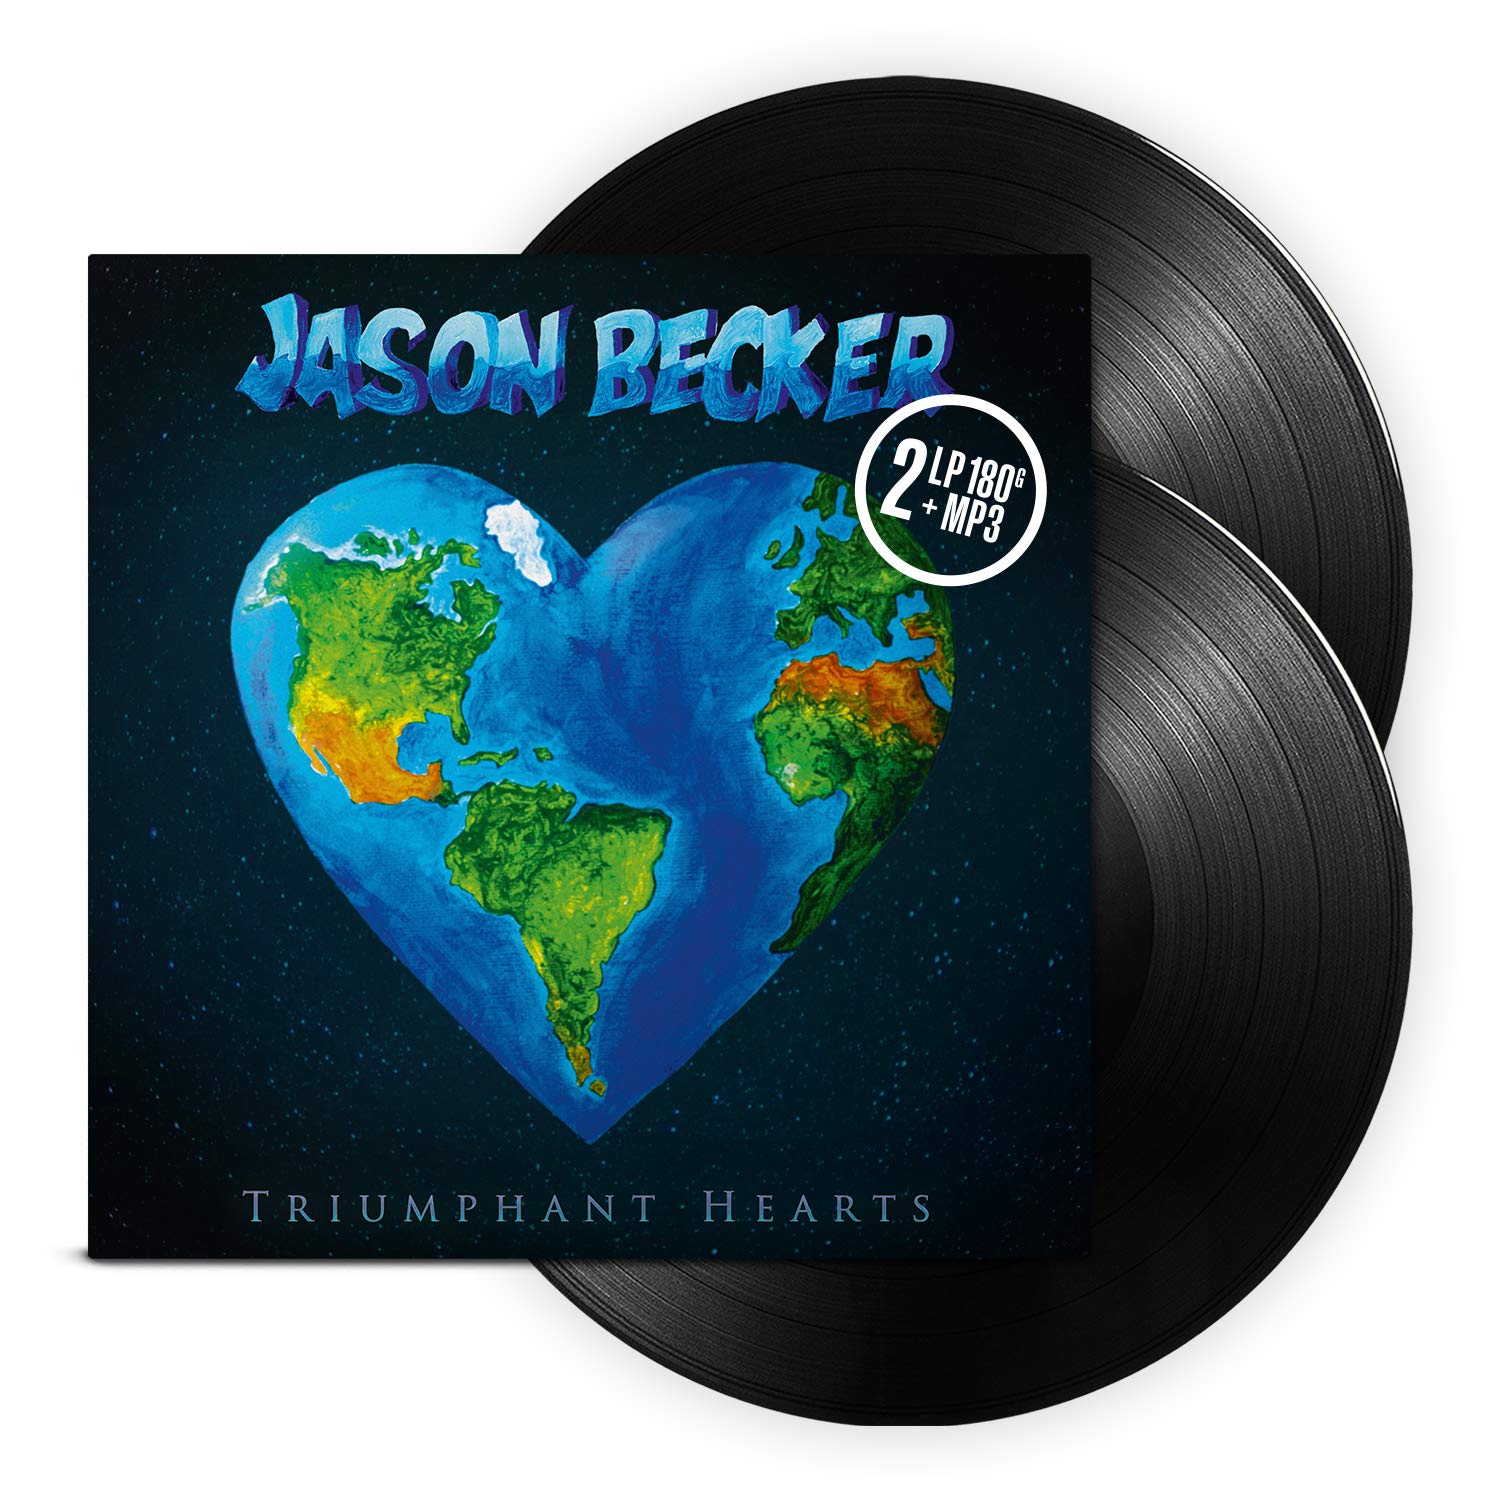 Jason Becker - Triumphant Hearts vinyl cover